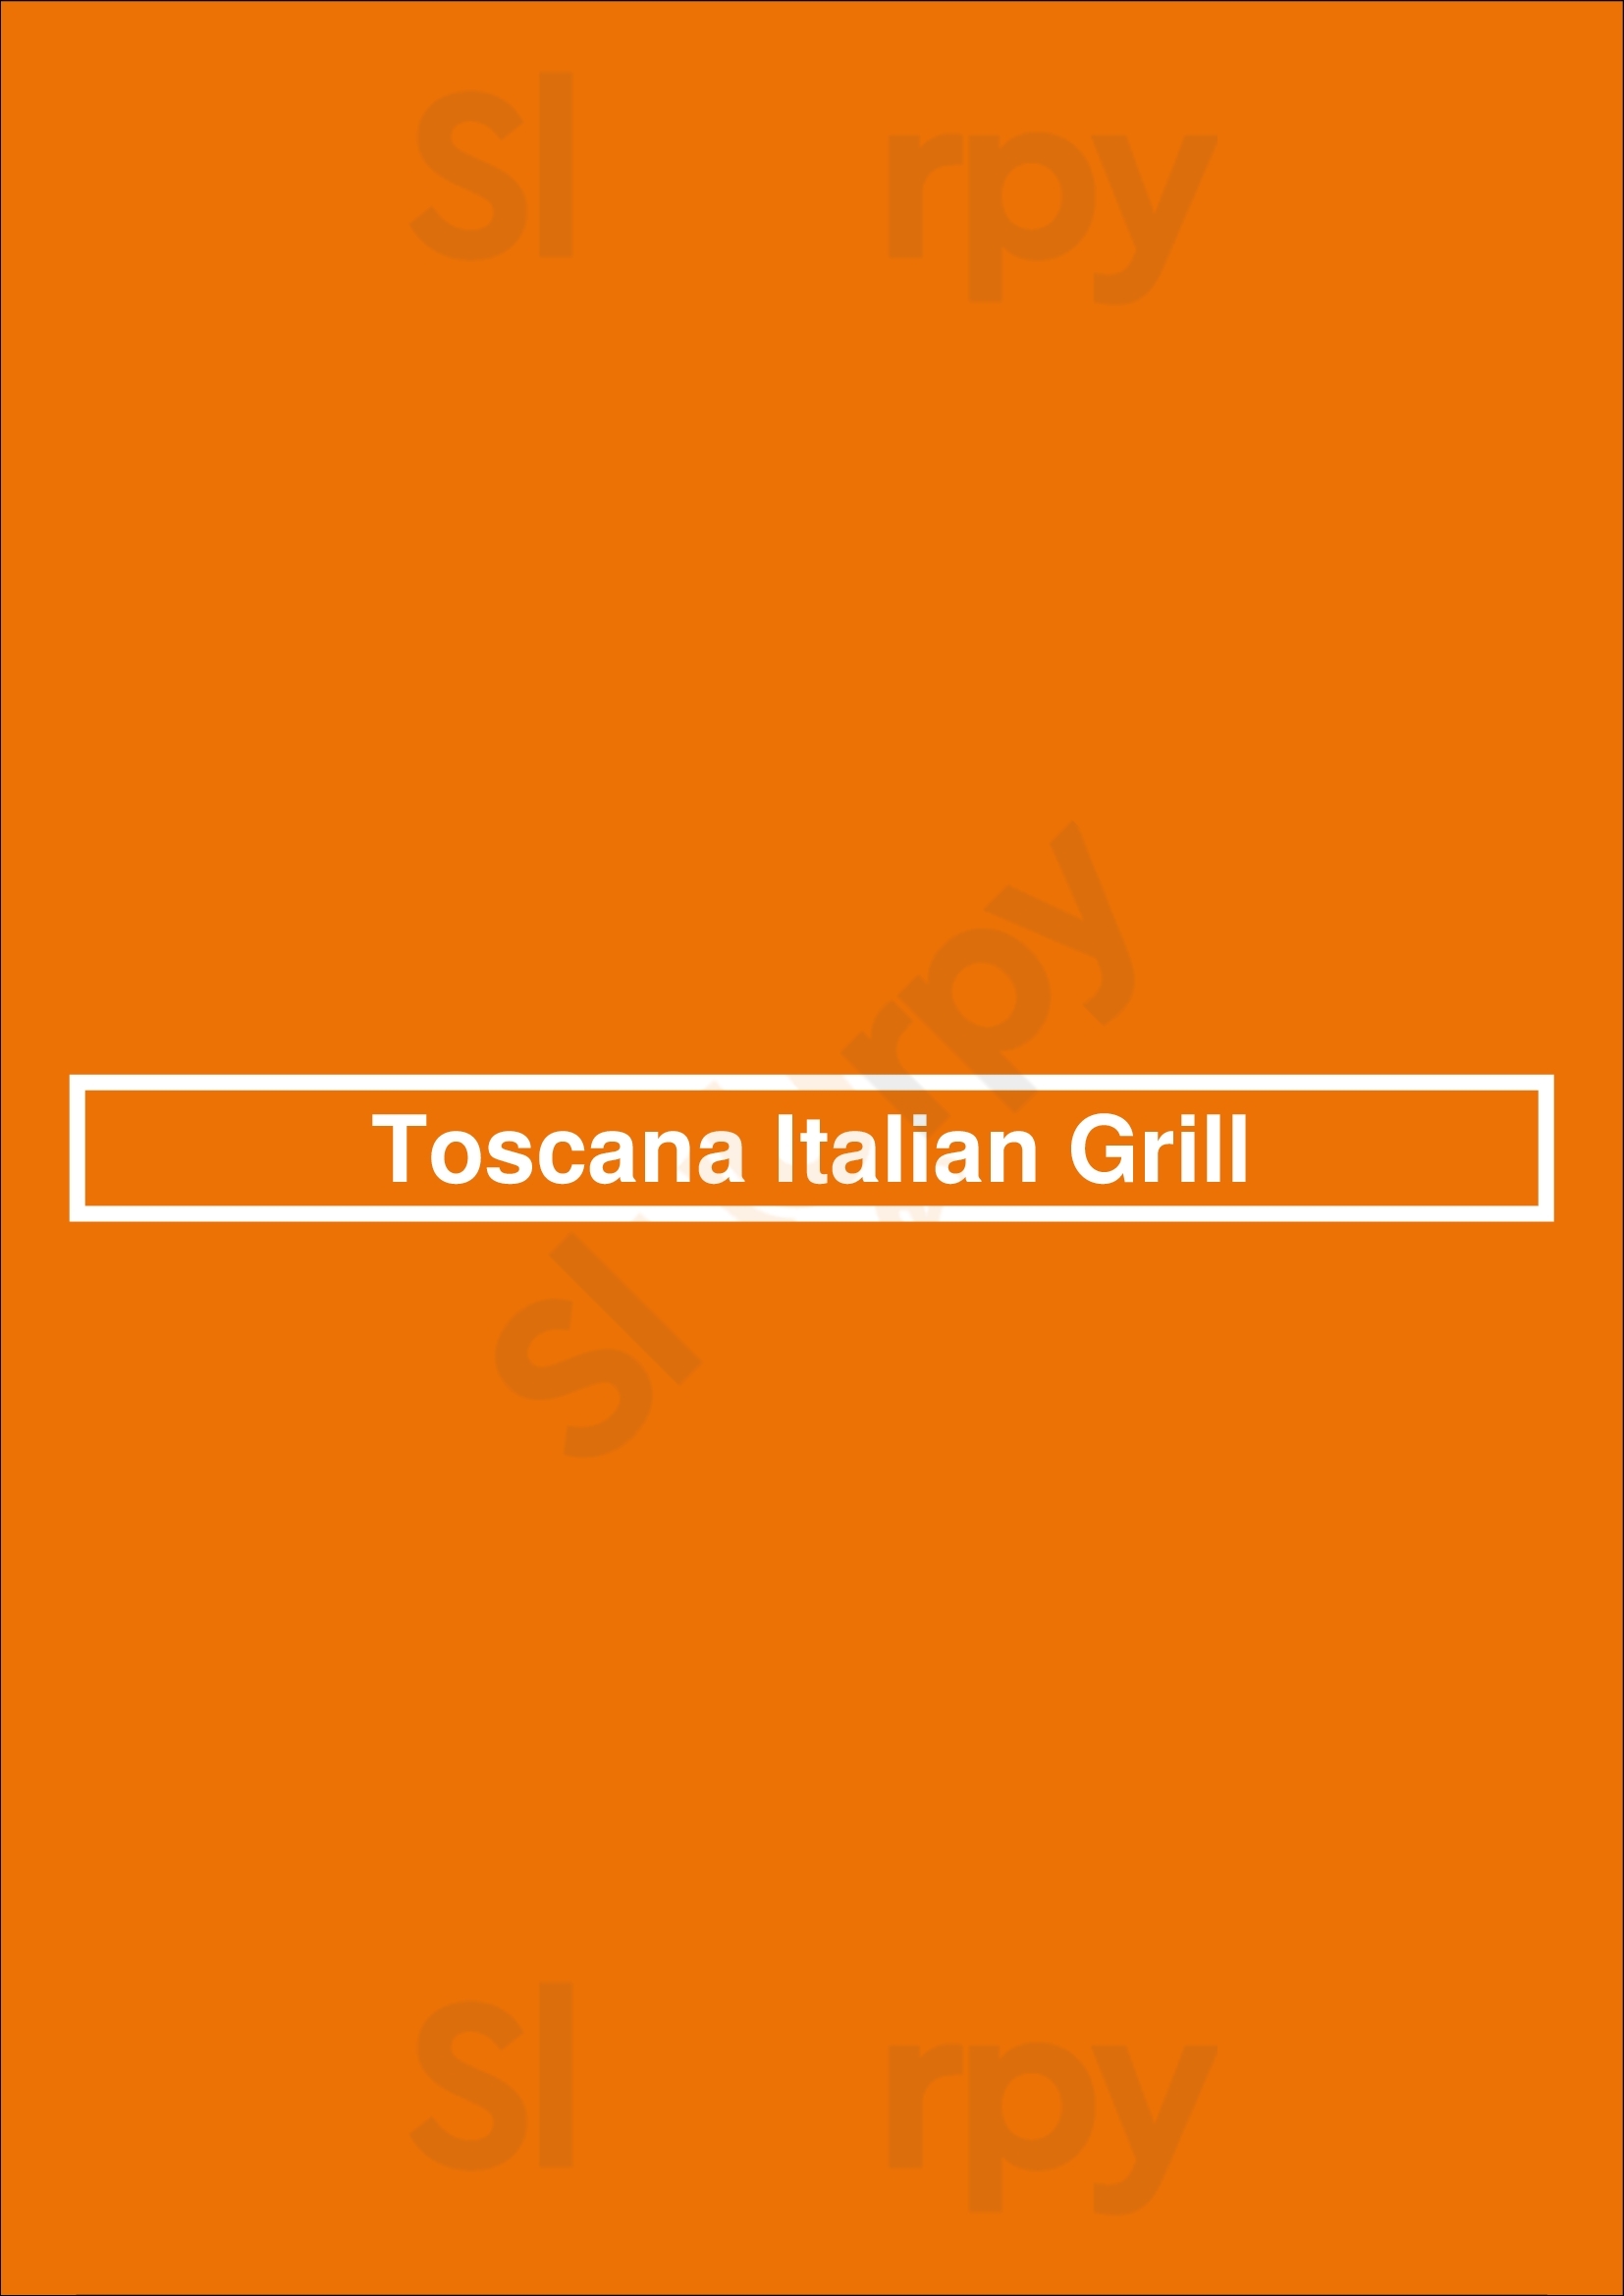 Toscana Italian Grill Calgary Menu - 1